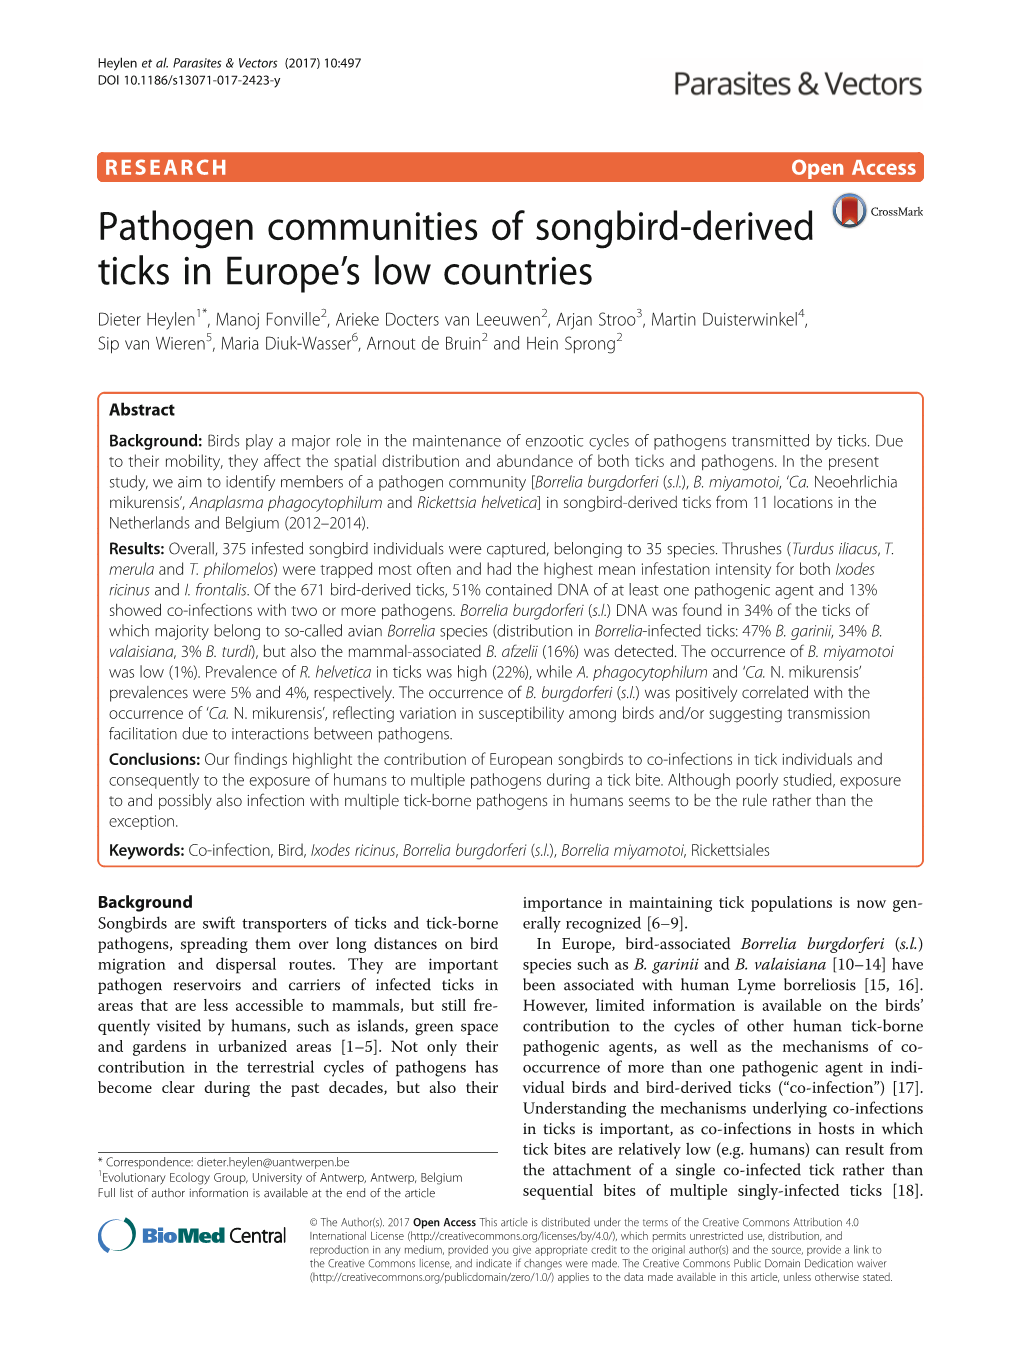 Pathogen Communities of Songbird-Derived Ticks in Europe's